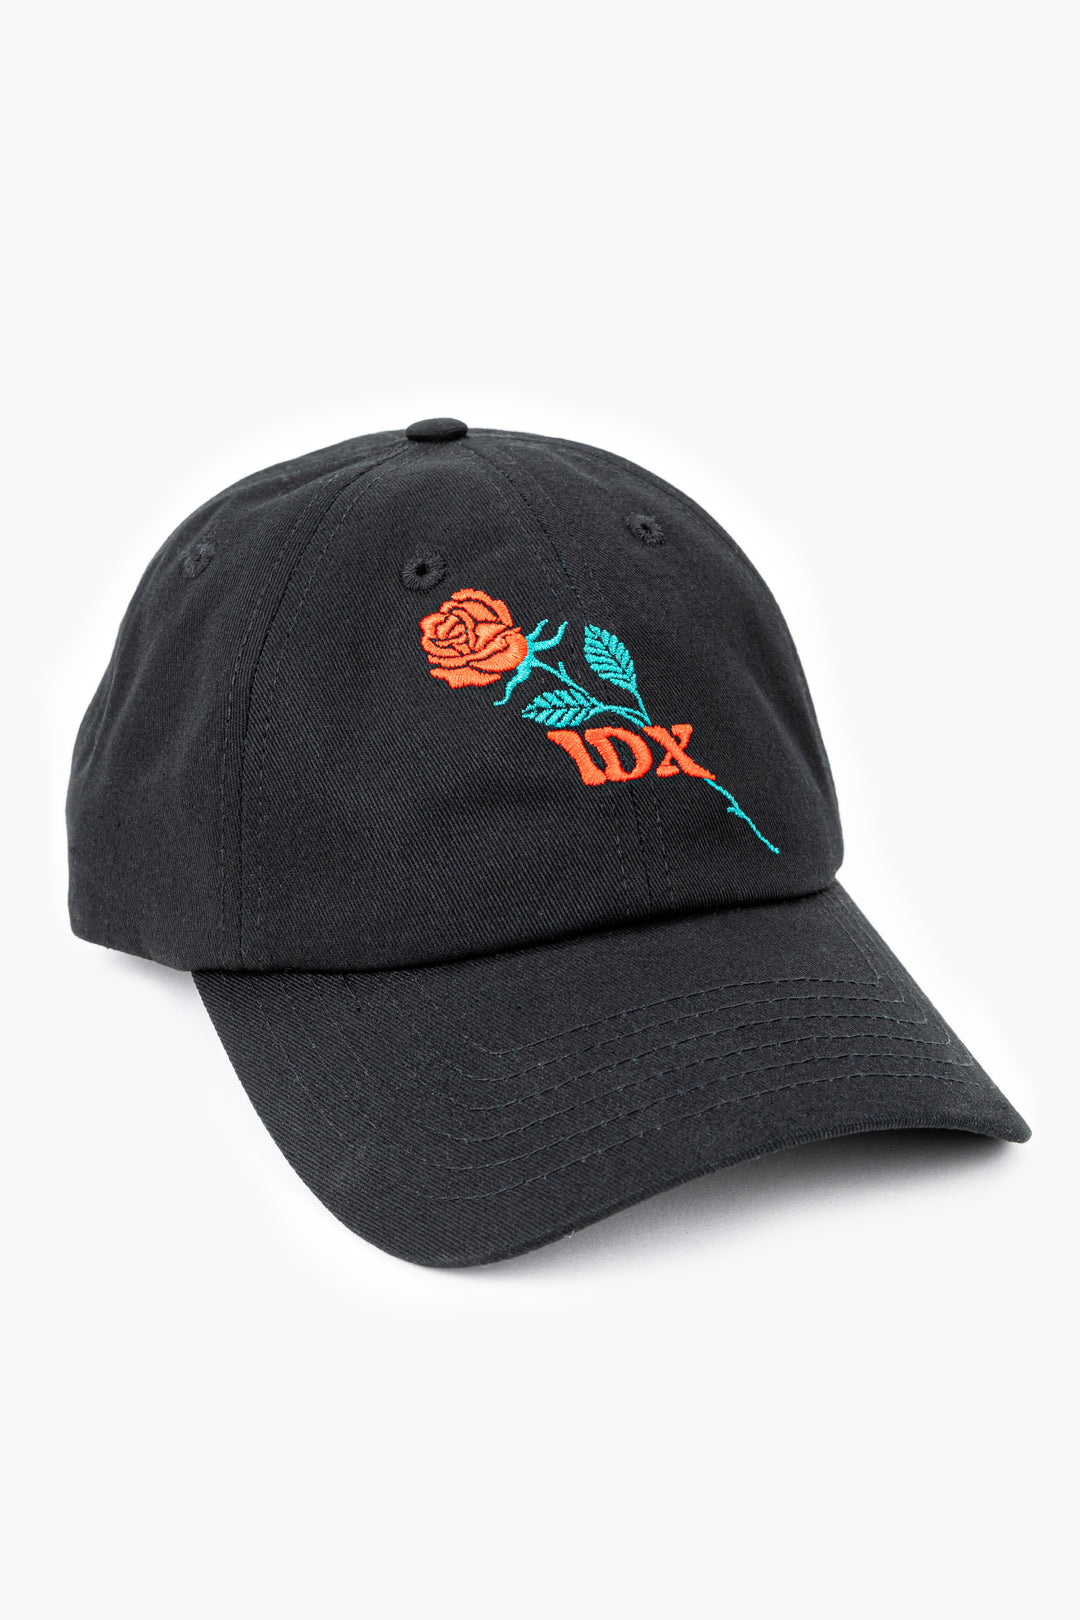 Sub Rosa Dad Hat - Indestructible MFG